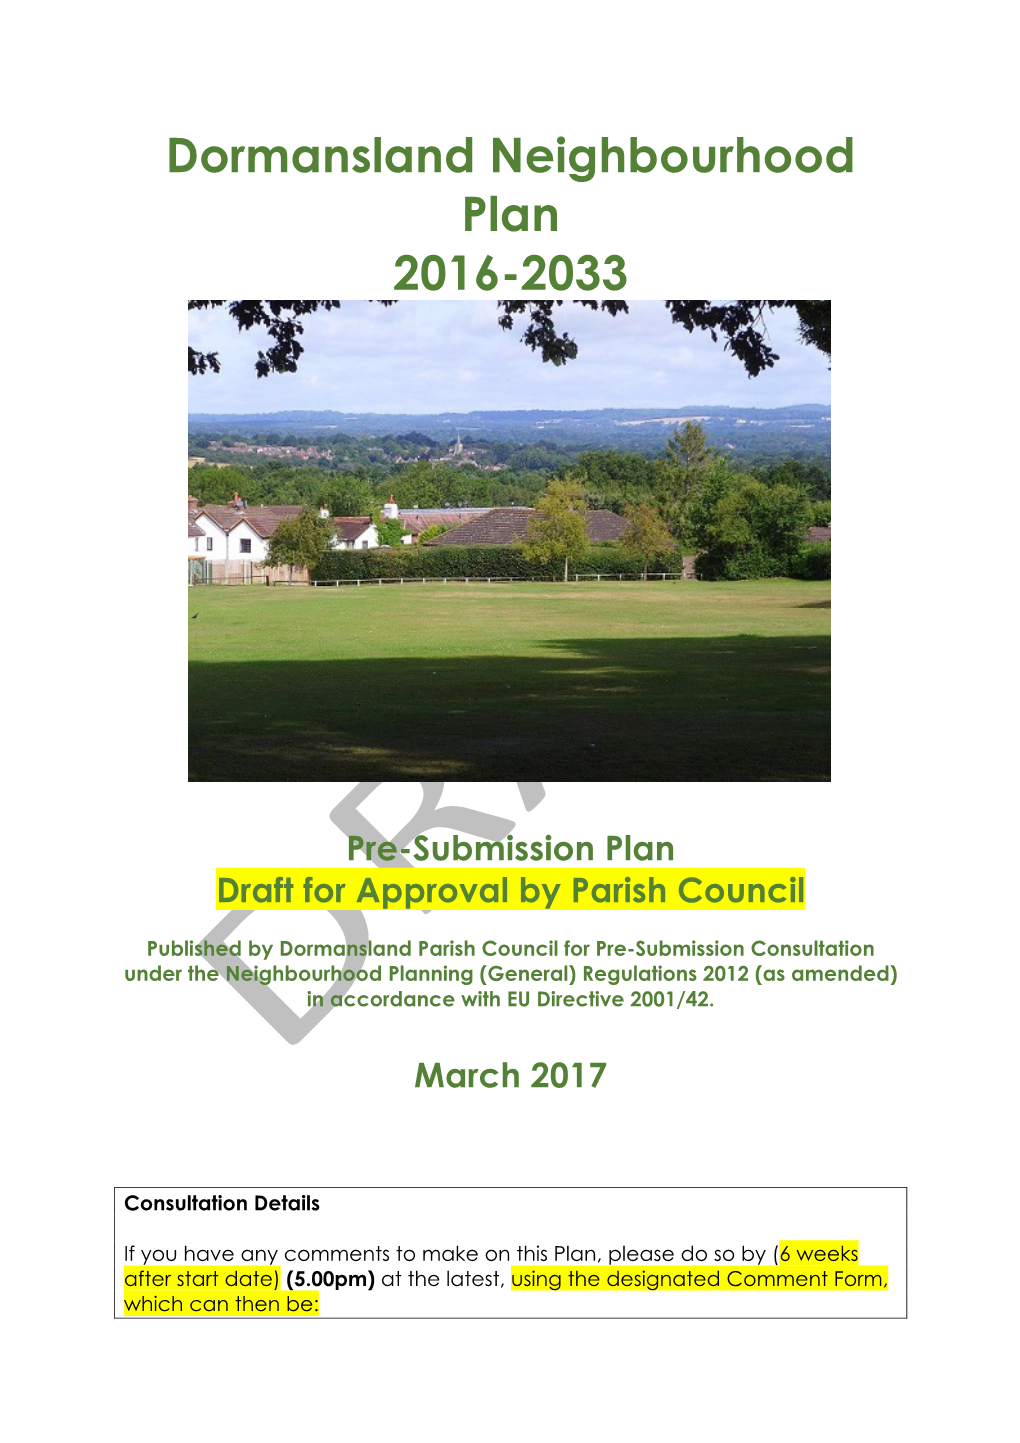 Dormansland Neighbourhood Plan 2016-2033 Pre-Submission Plan March 2017